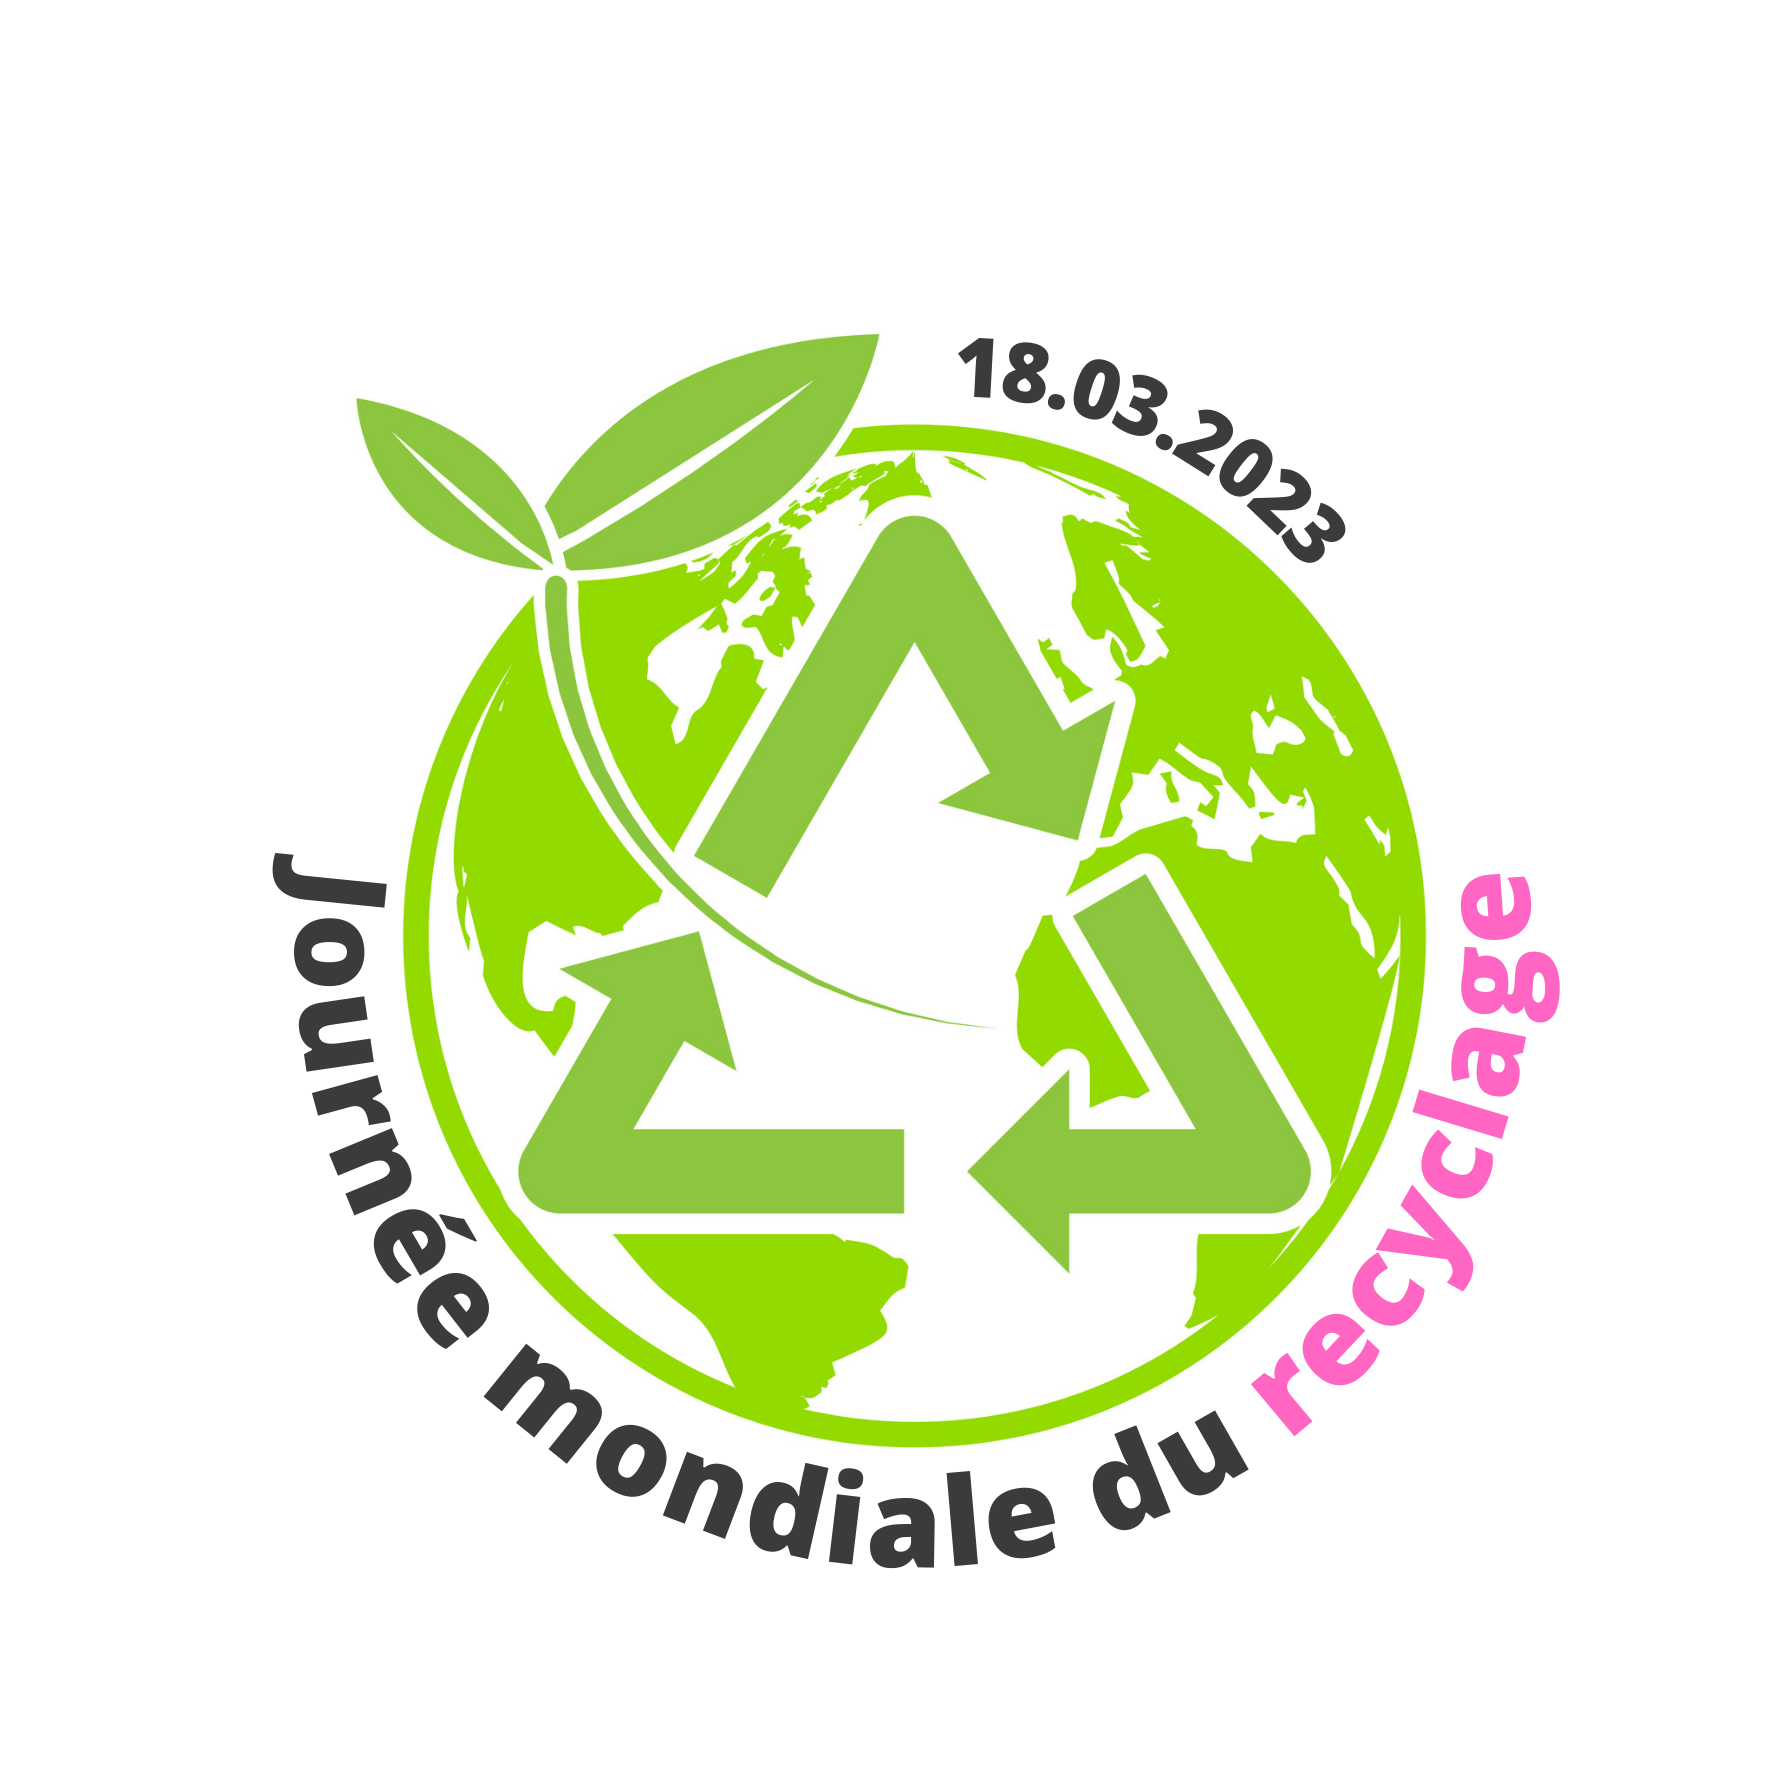 Le recyclage progresse en France, dans le Grand Belfort aussi !